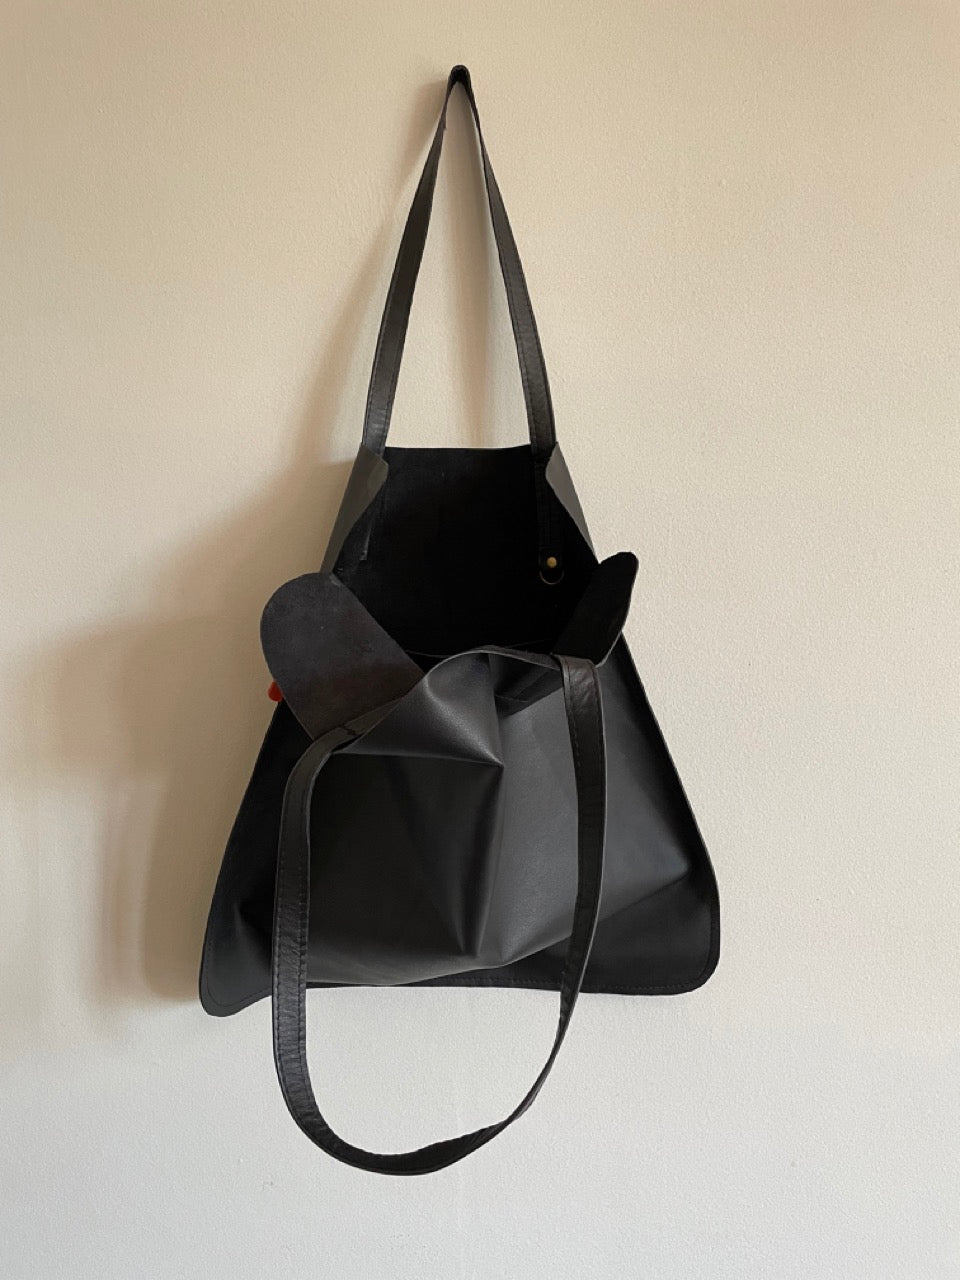 Marmalade Large Leather Tote Bag  45 x 45cm - Colour: Black